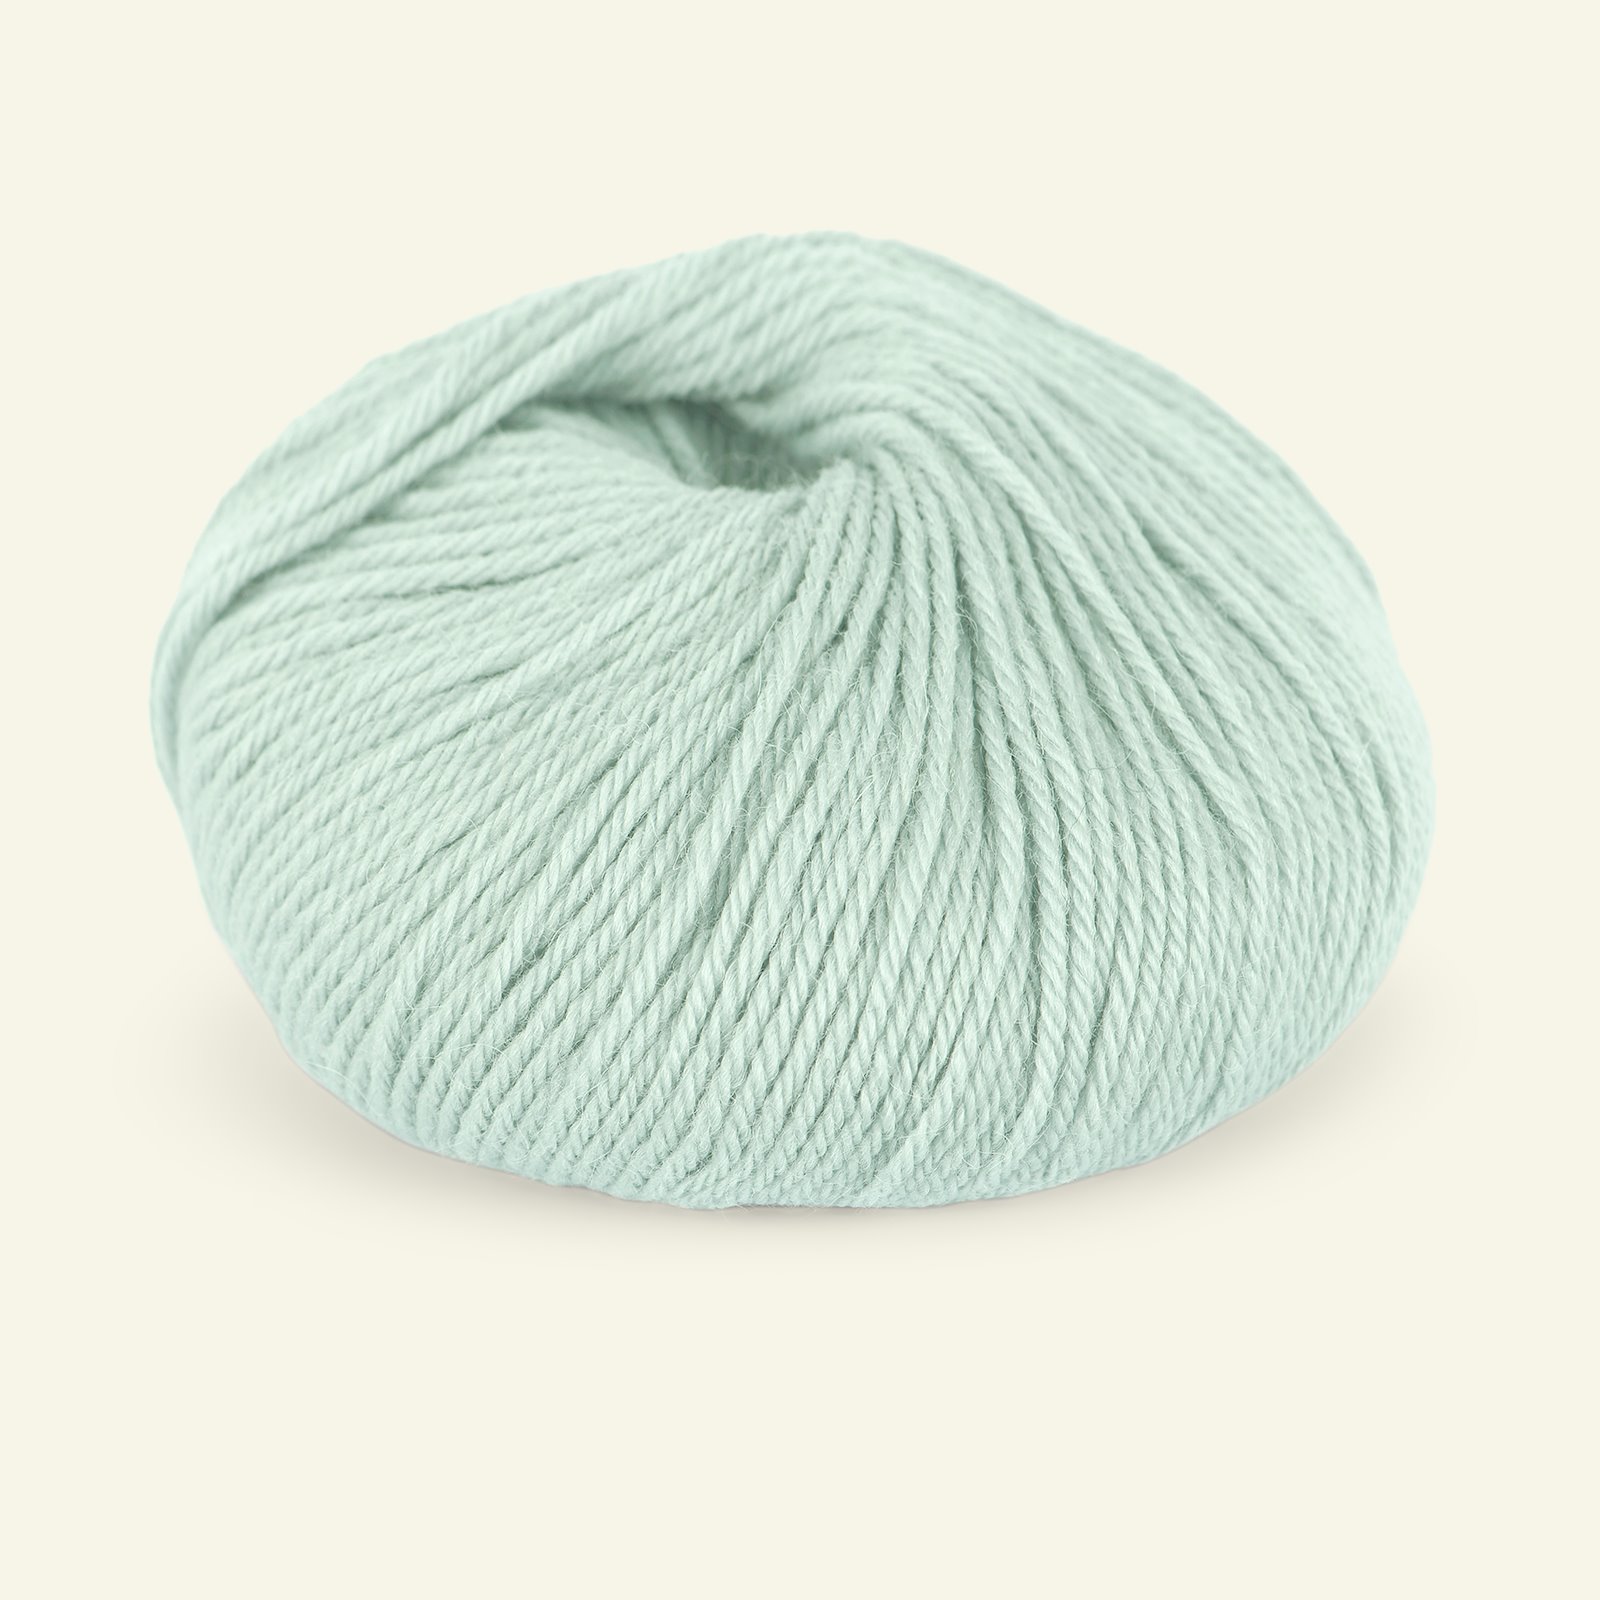 Du Store Alpakka, alpaca merino mixed yarn "Sterk", mint green (915) 90000707_pack_b